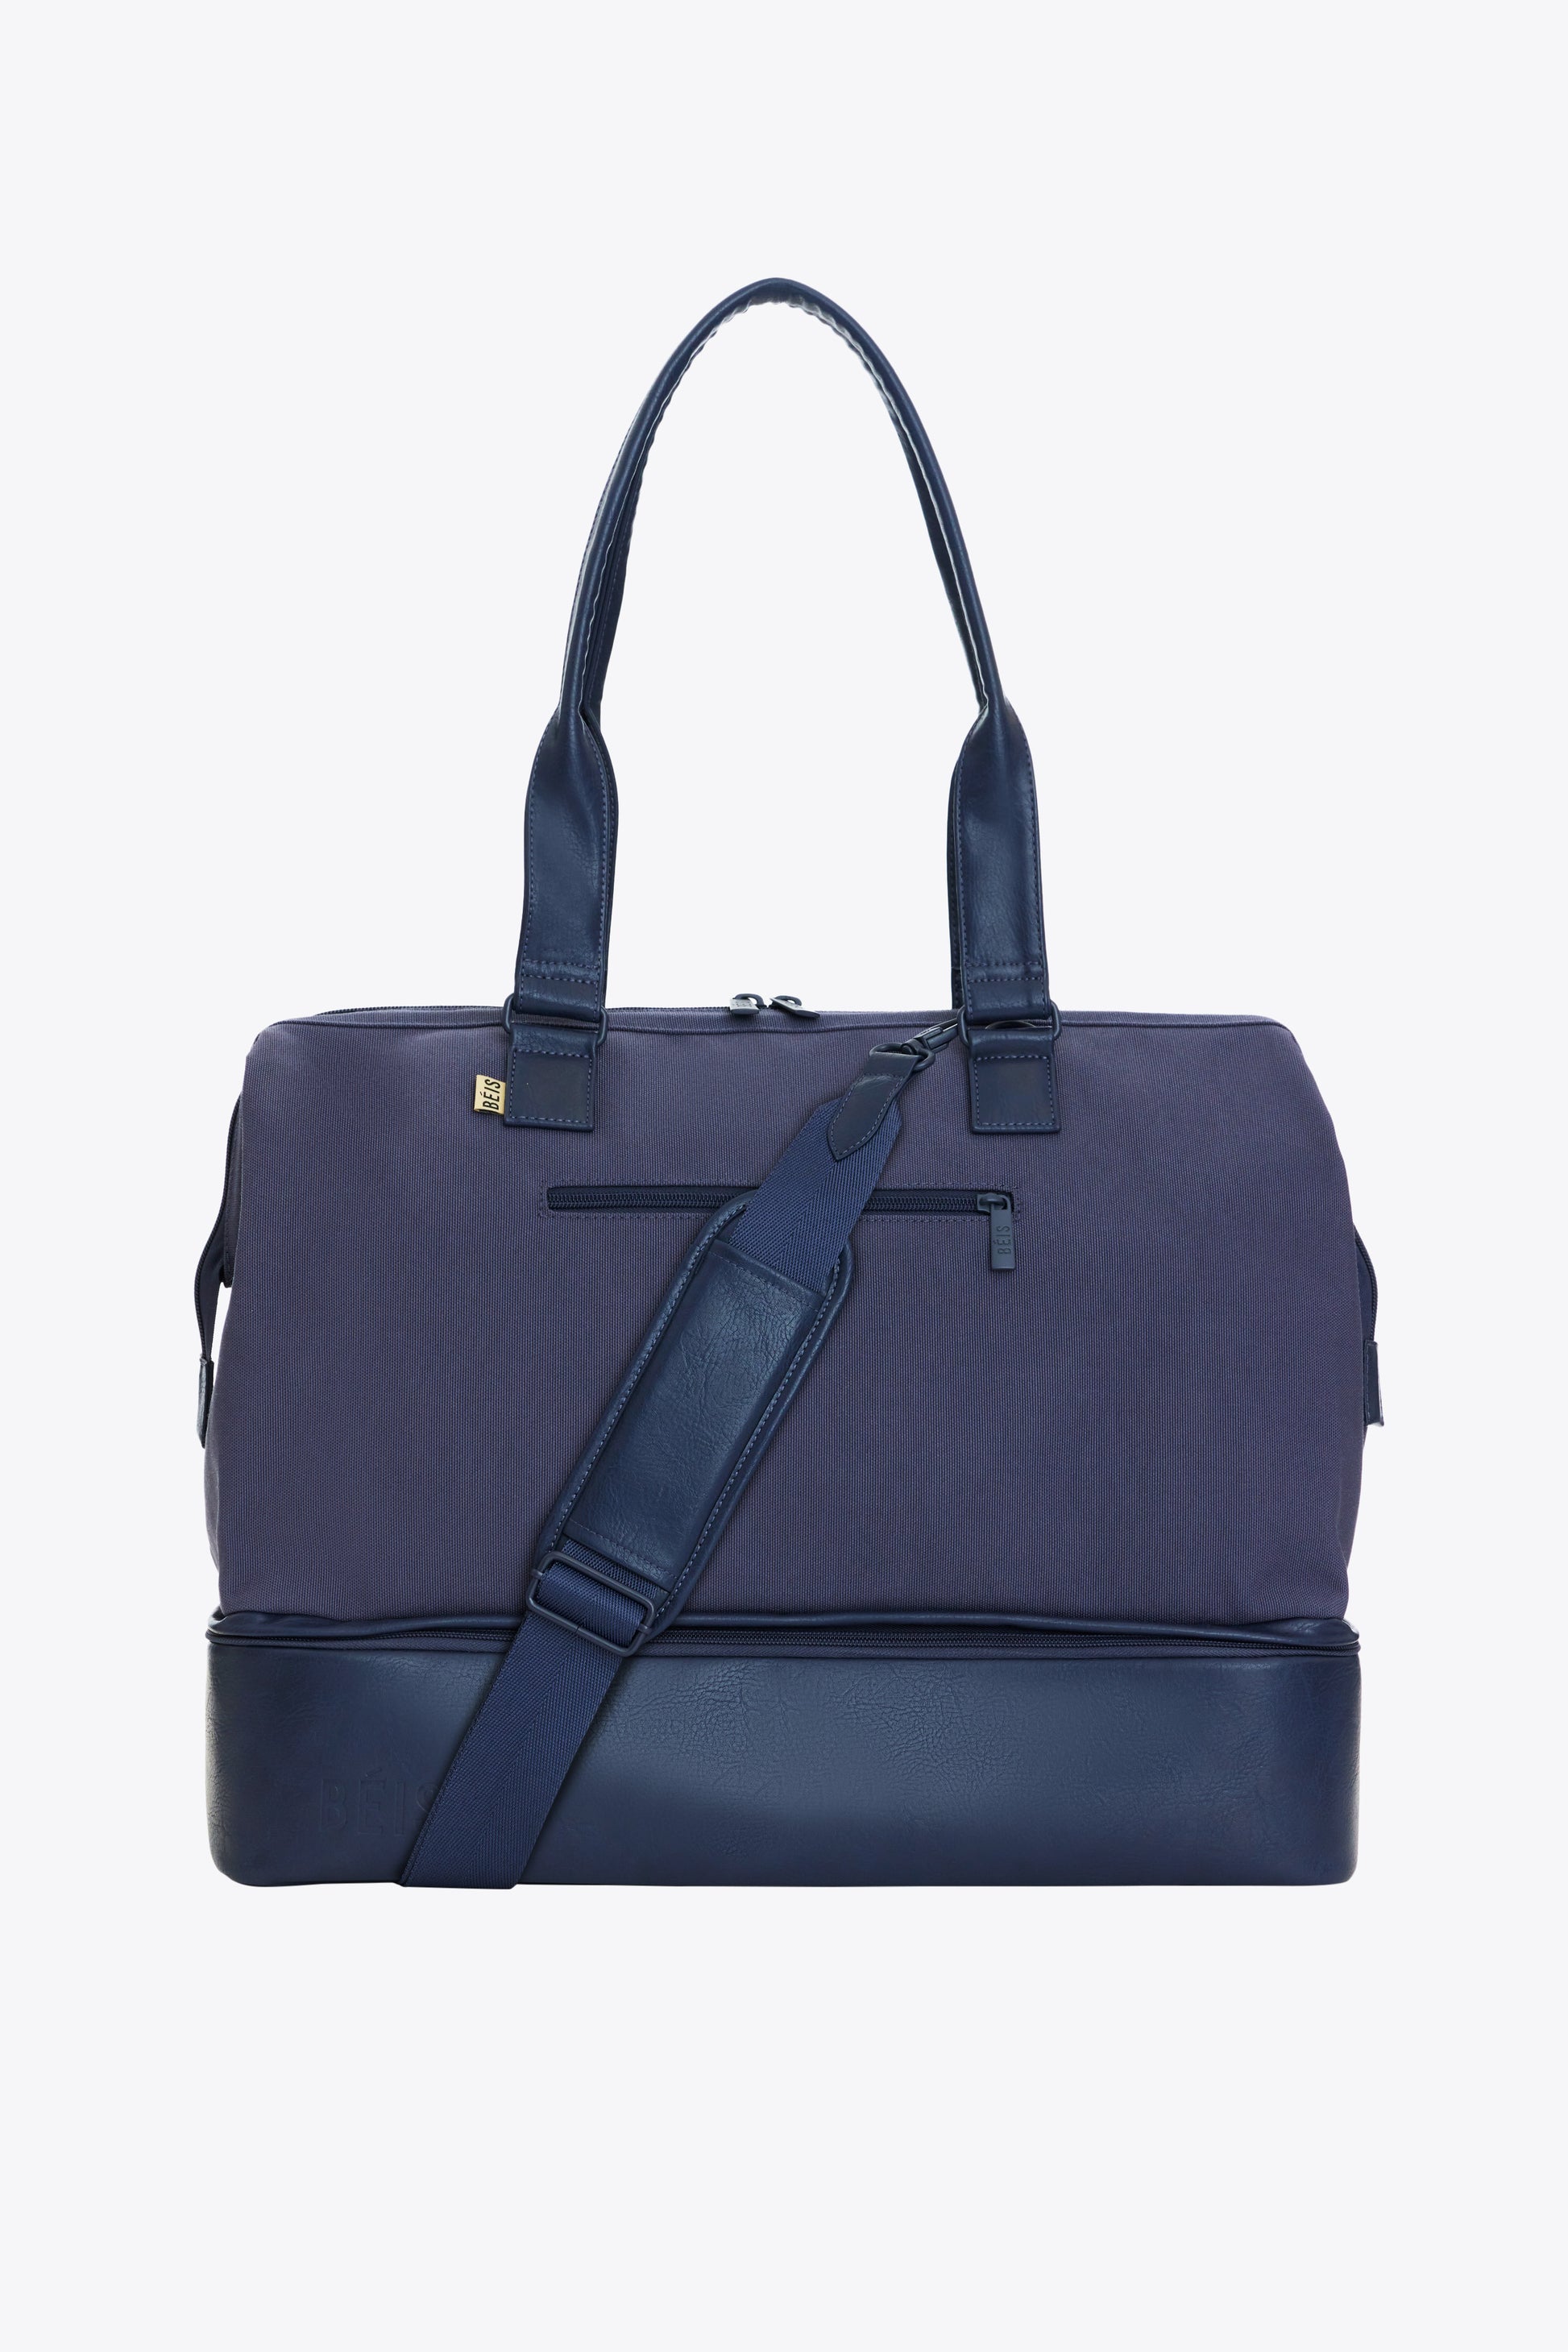 BÉIS 'The Convertible Weekender' in Navy - Blue Overnight Bag & Weekend Bag